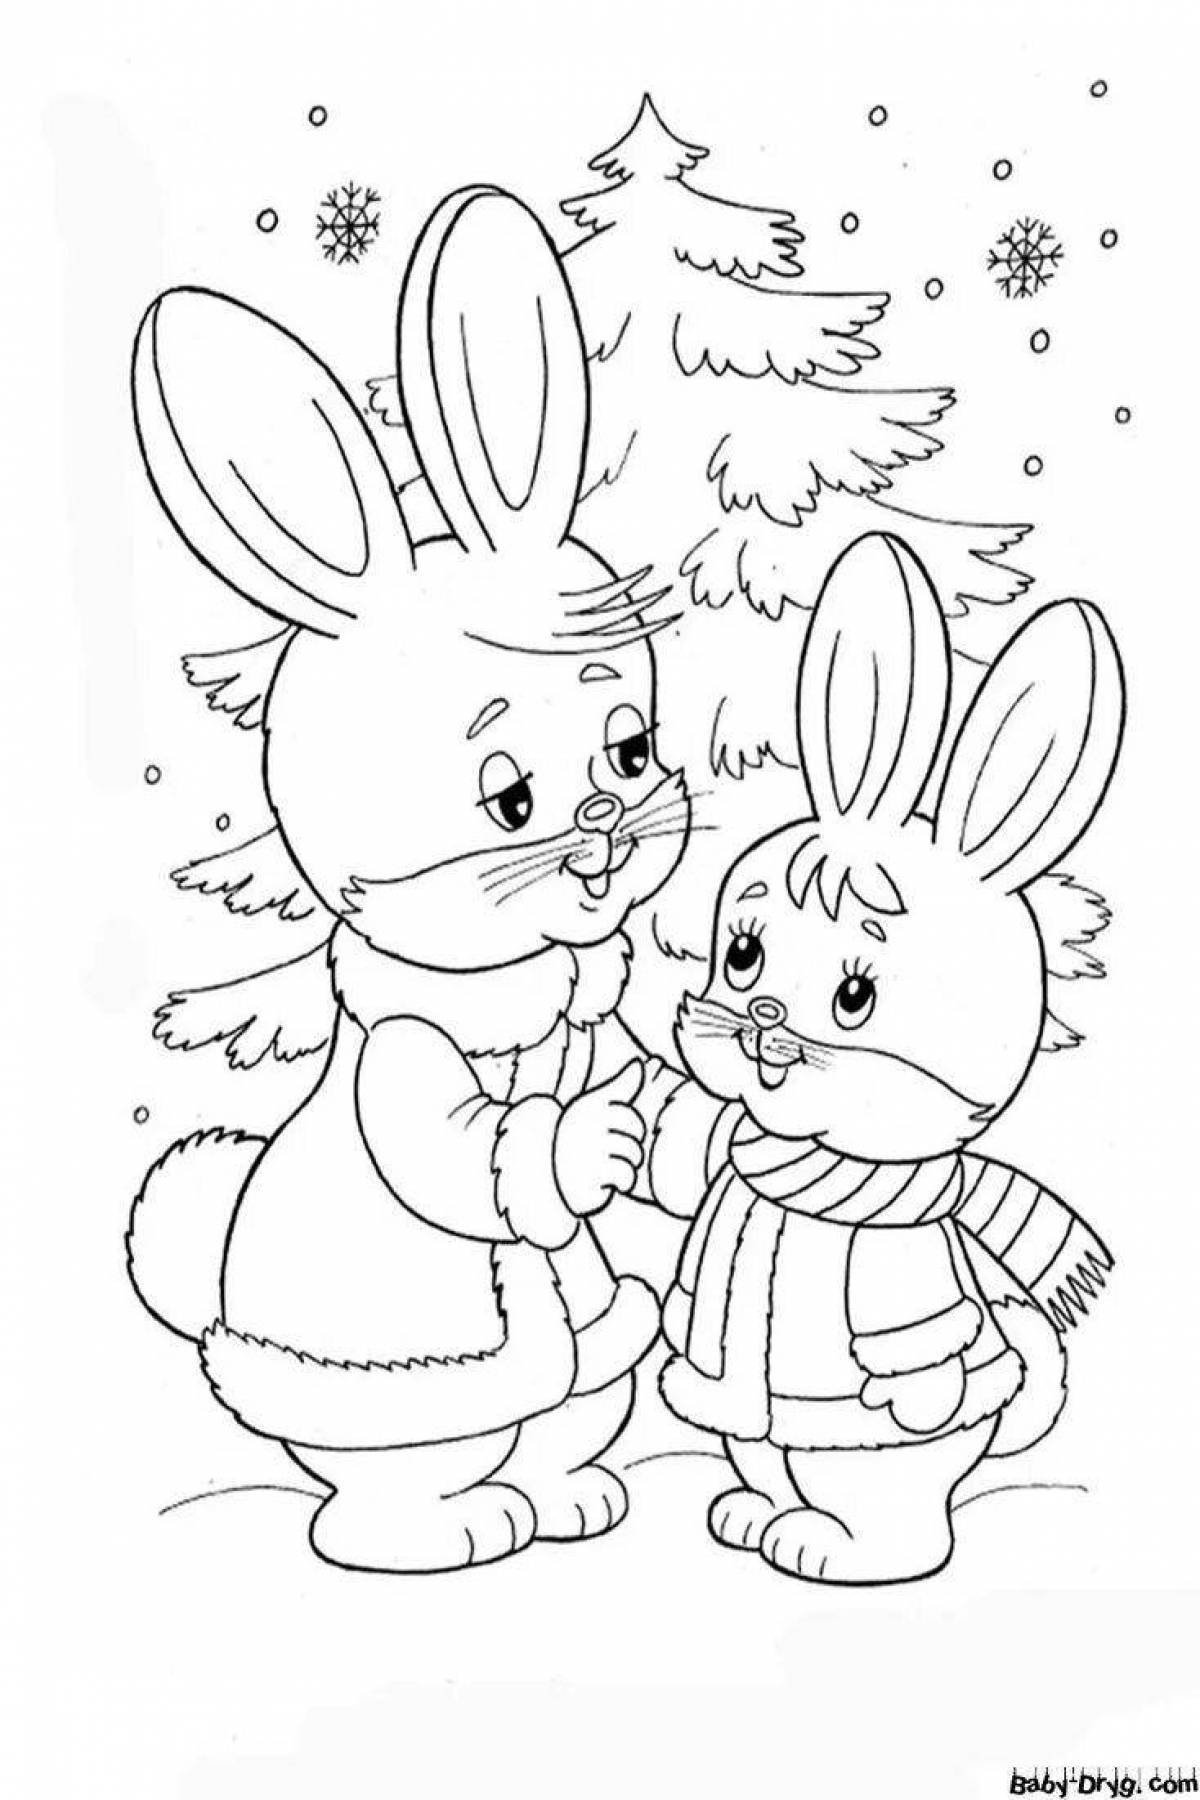 Fun coloring book year of the rabbit 2023